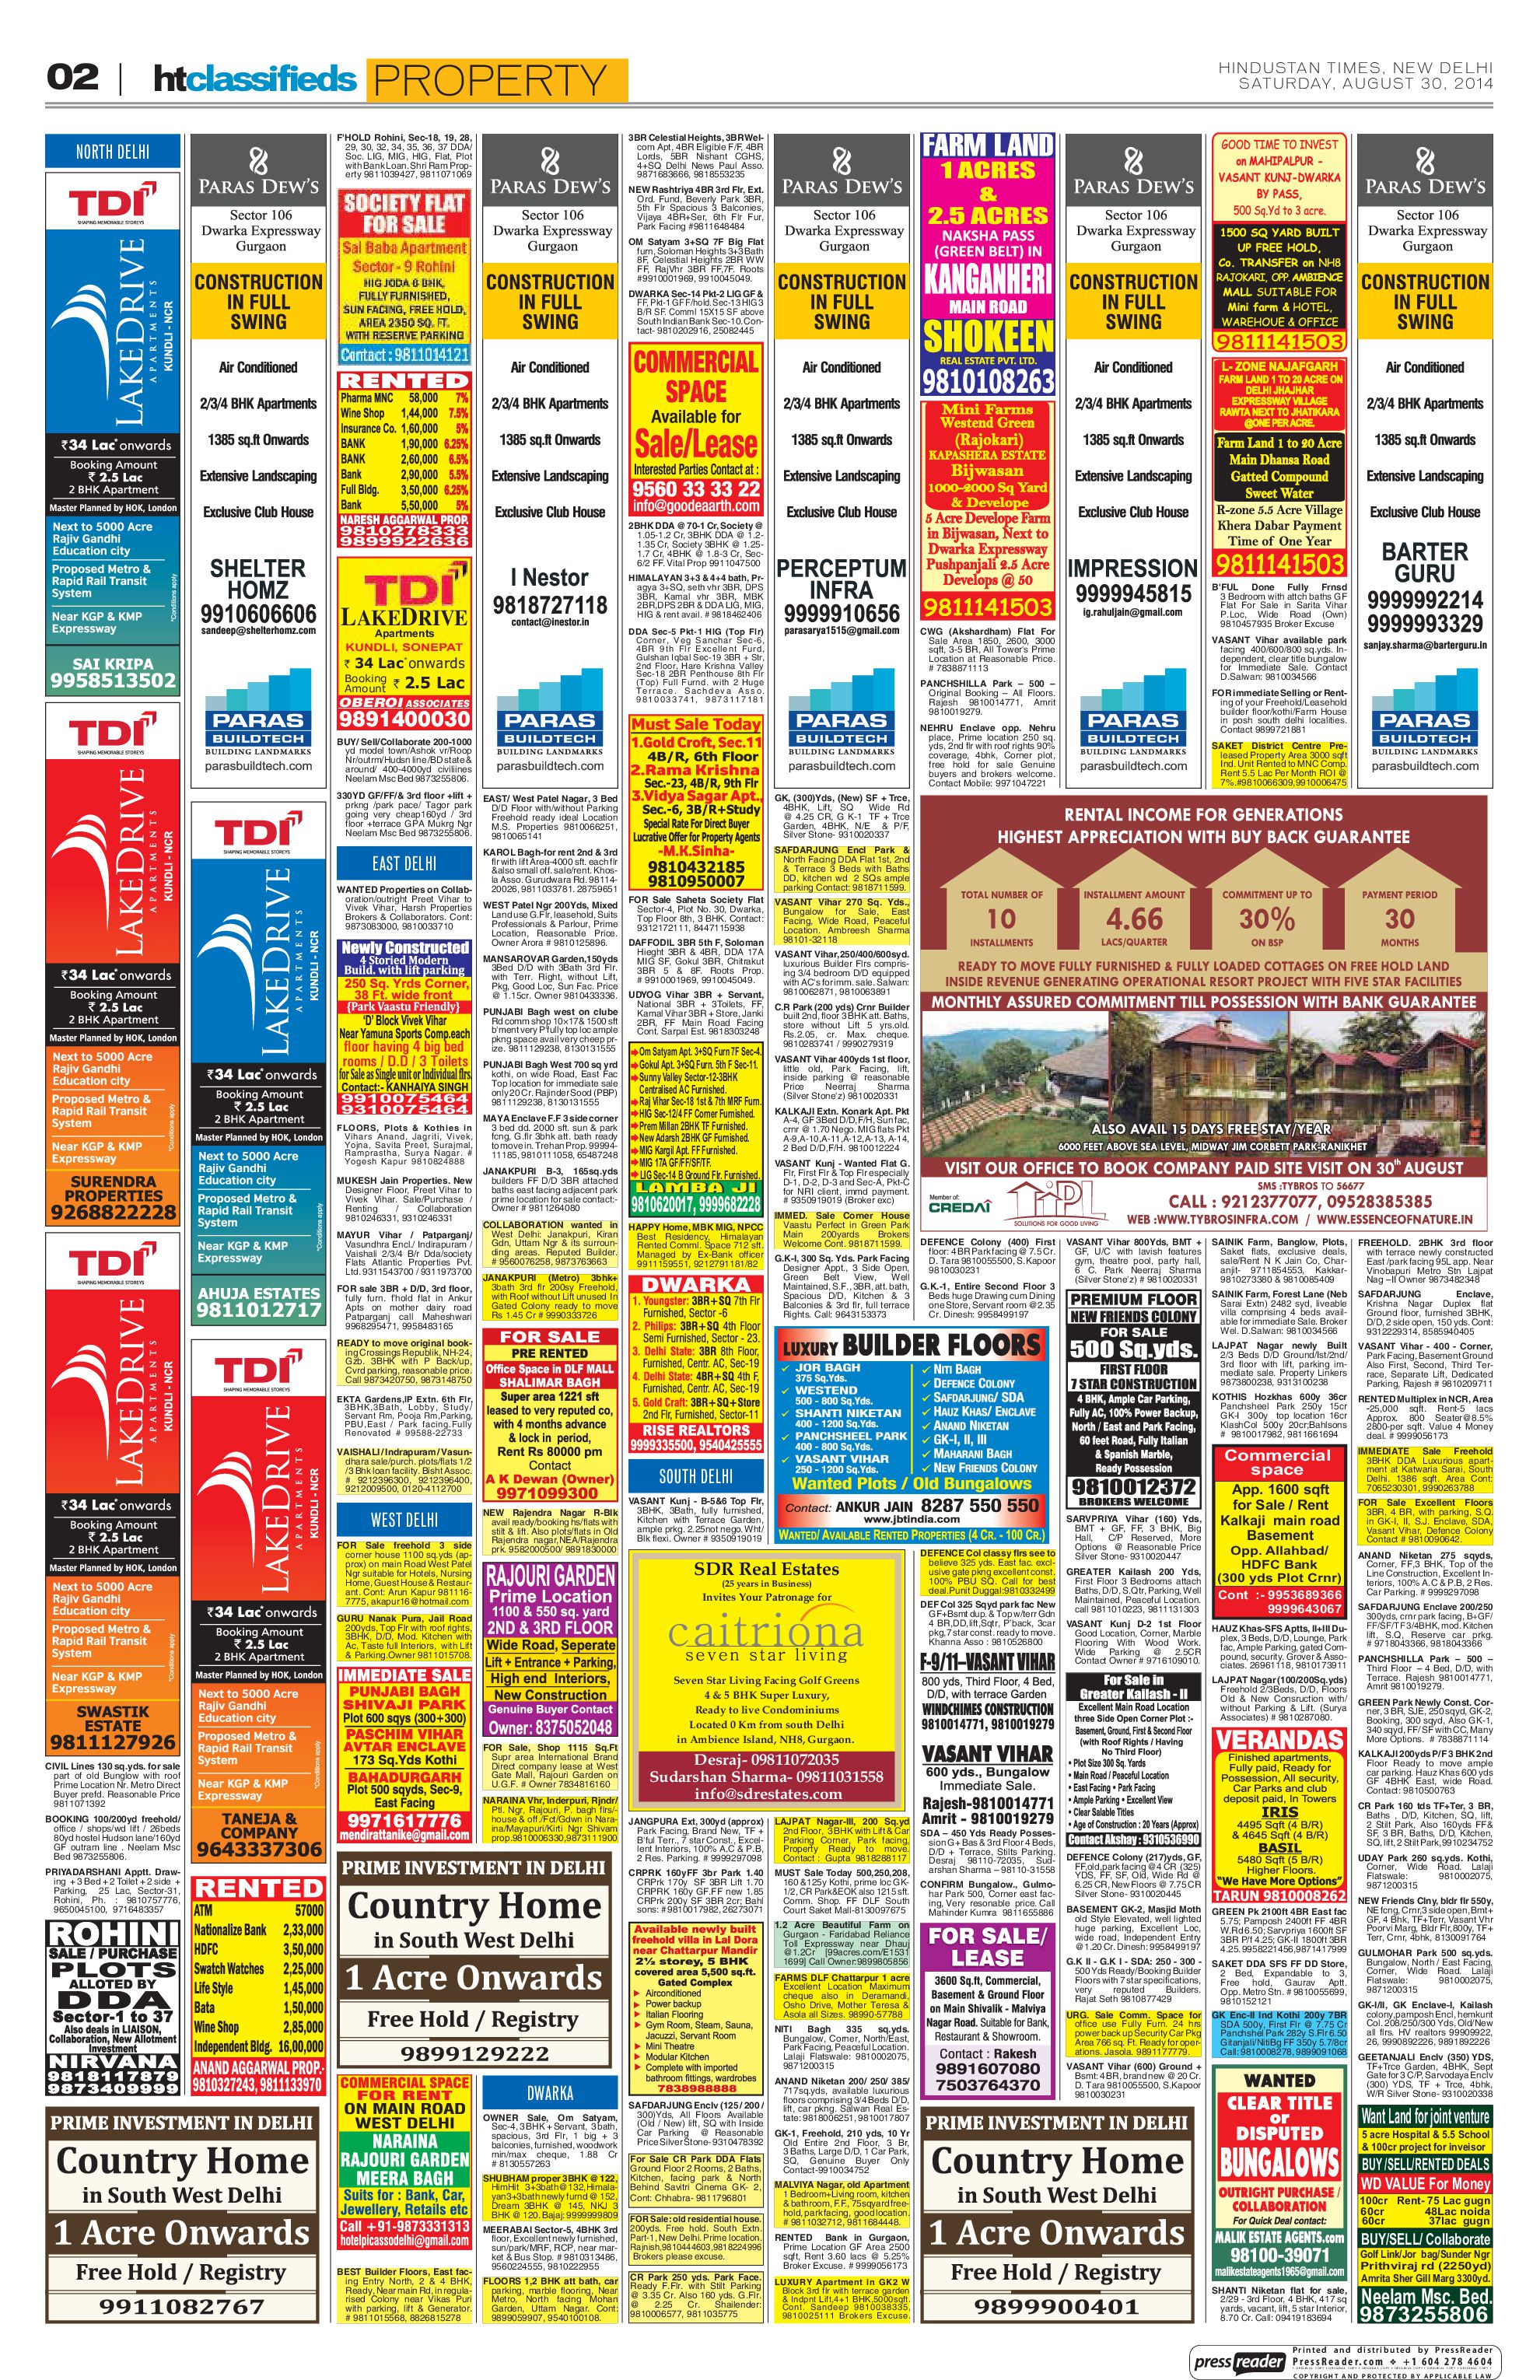 property-ads-in-newspaper